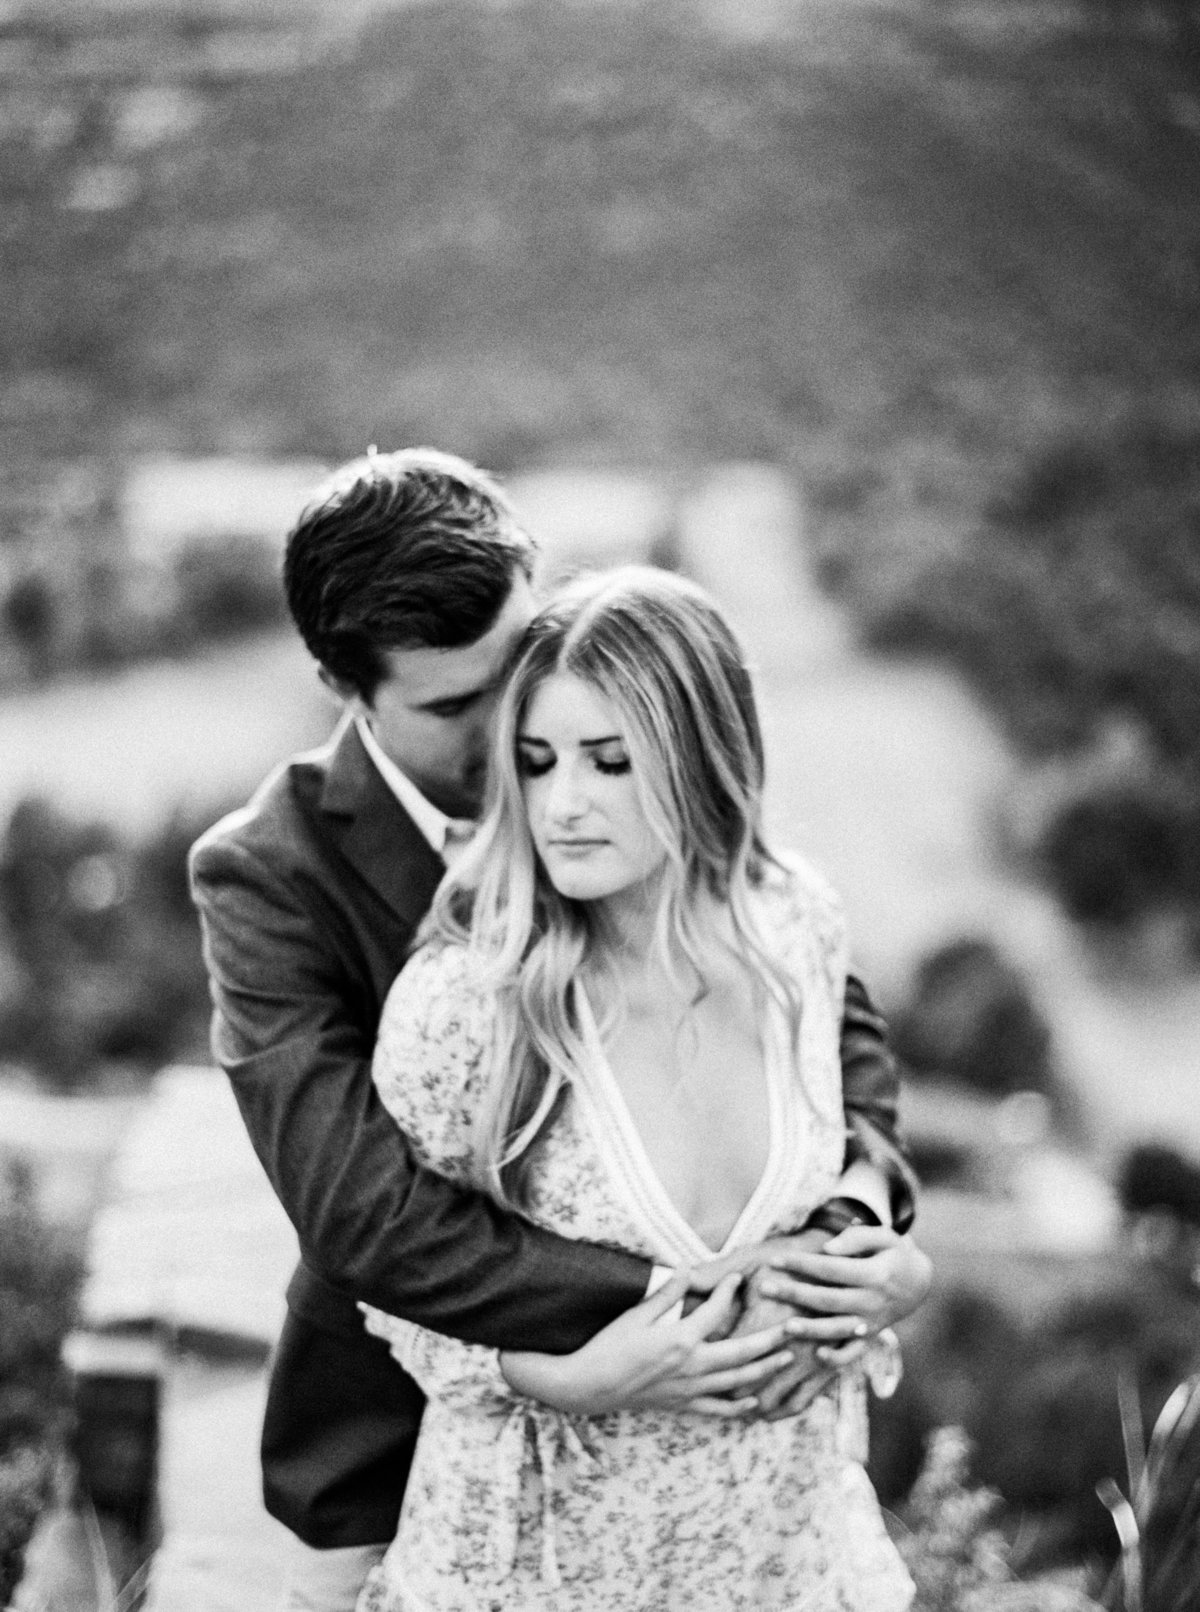 Kristen & Derek | Engagement Session | Sedona, Arizona | Mary Claire Photography | Arizona & Destination Fine Art Wedding Photographer